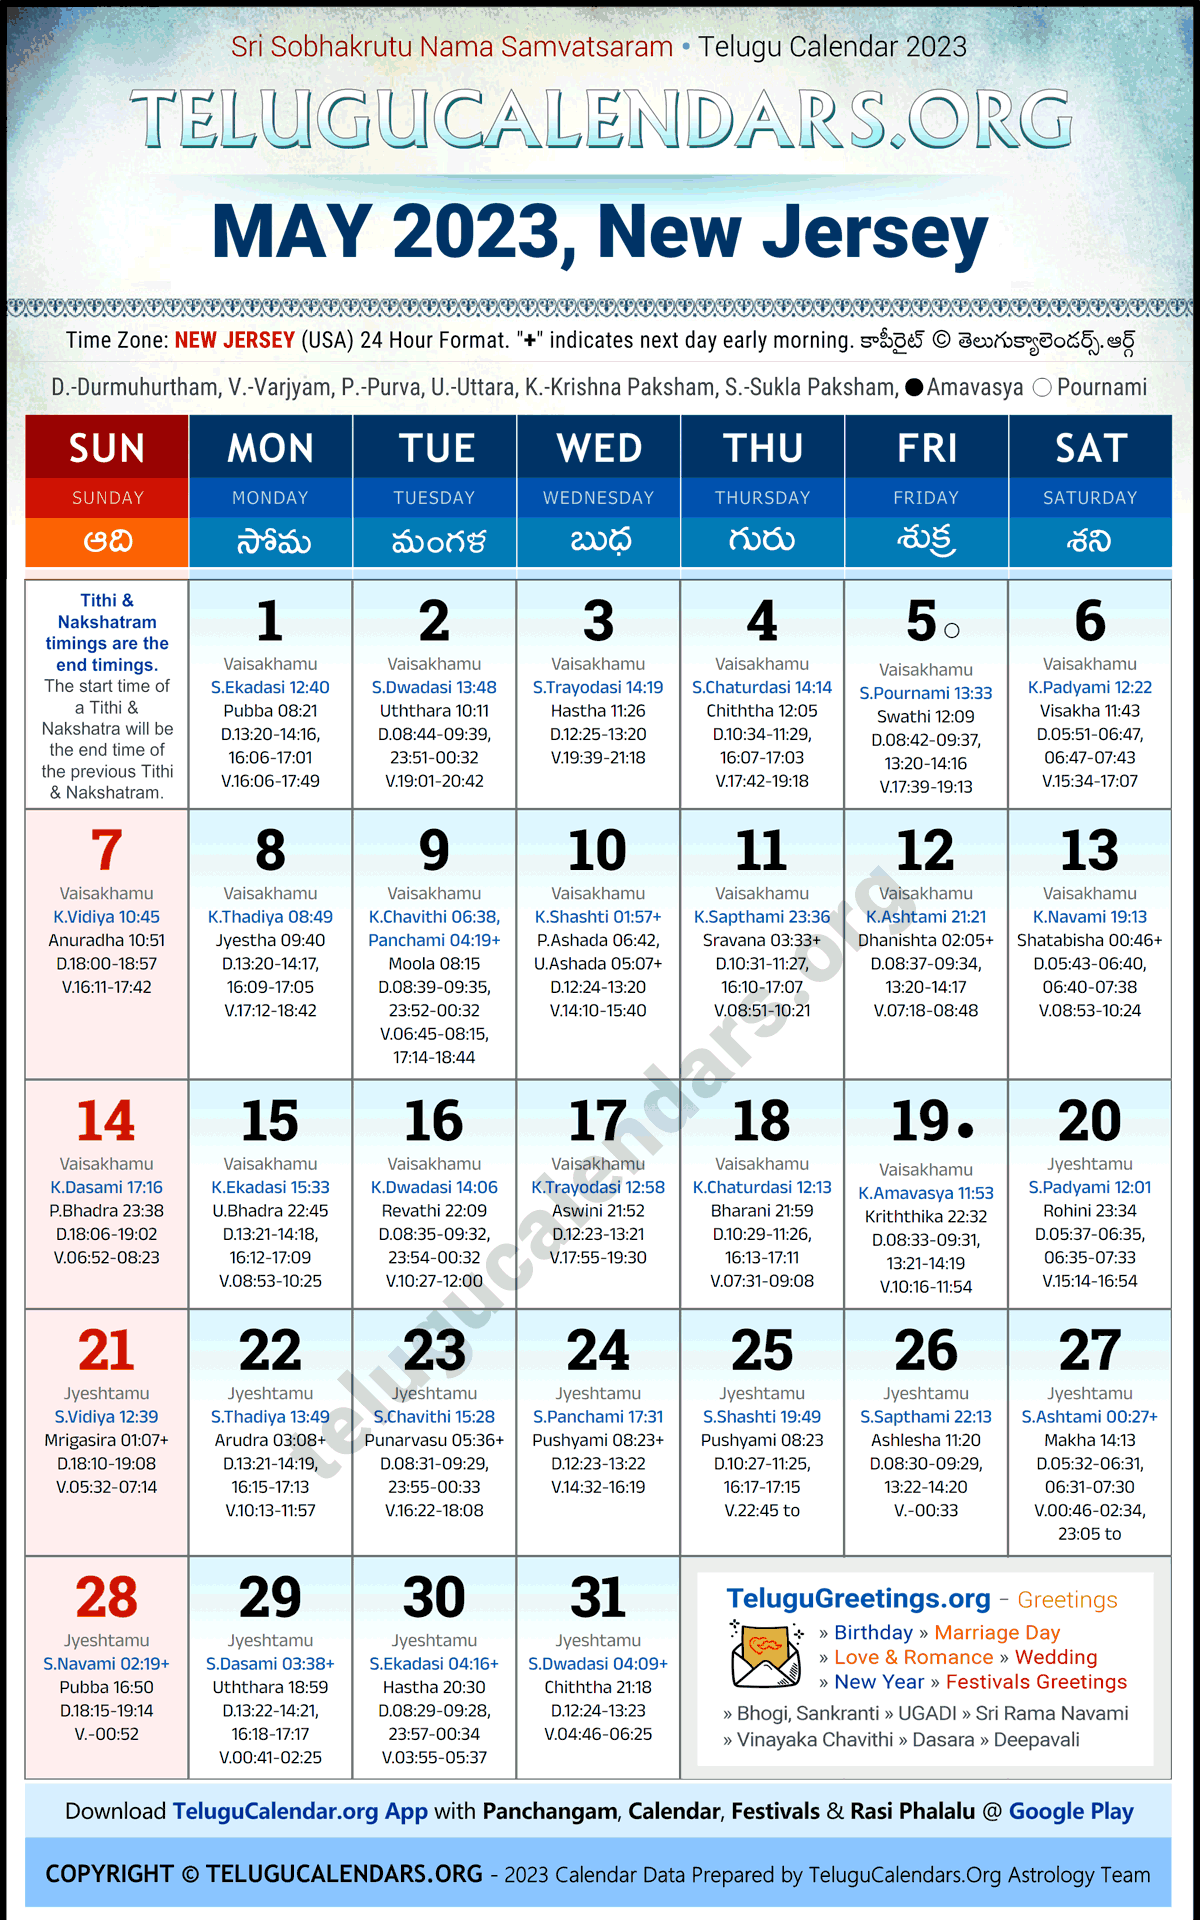 New Jersey 2023 May Telugu Calendar Festivals & Holidays in English PDF